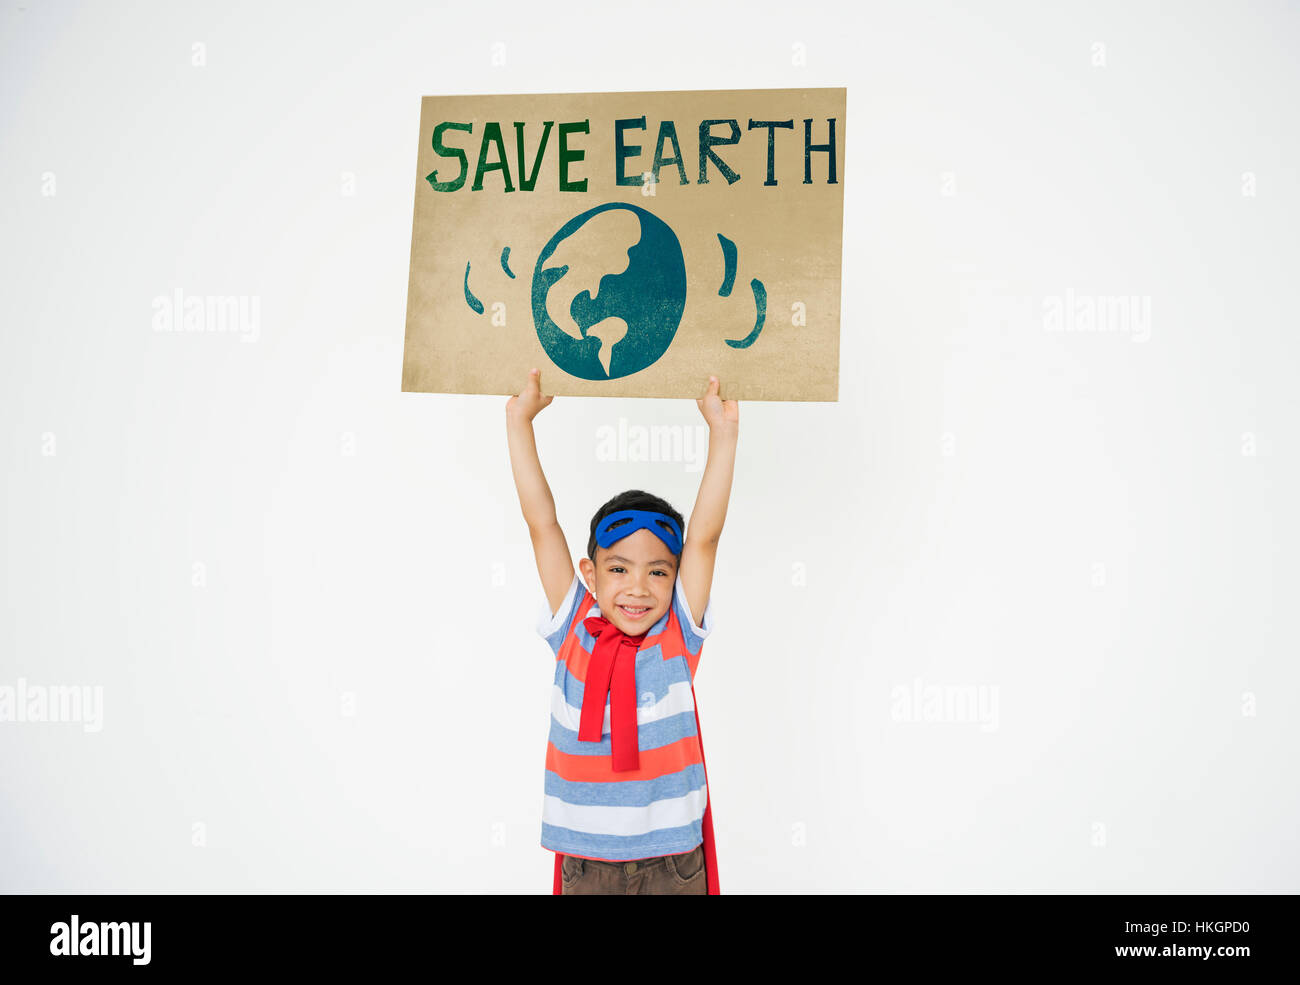 Save Earth Global Environment Boy girl Concept Stock Photo